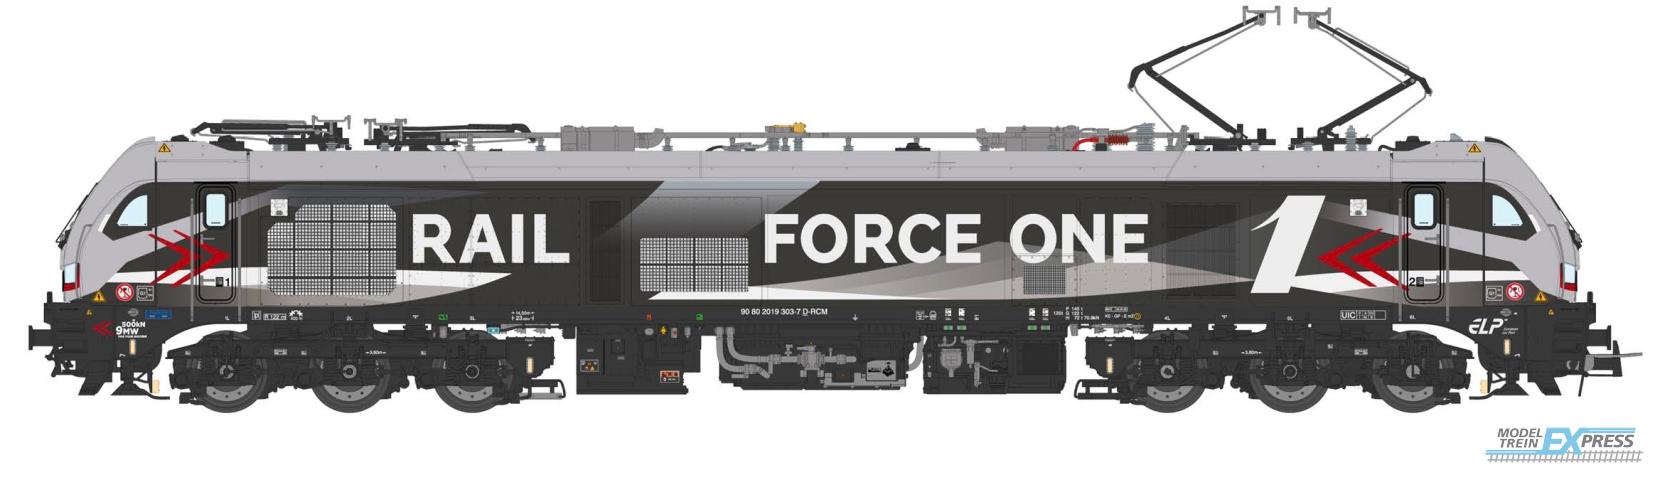 Sudexpress S0193031 Euro 9000 locomotive 2019 303-7 Rail Force One, DC Analogic